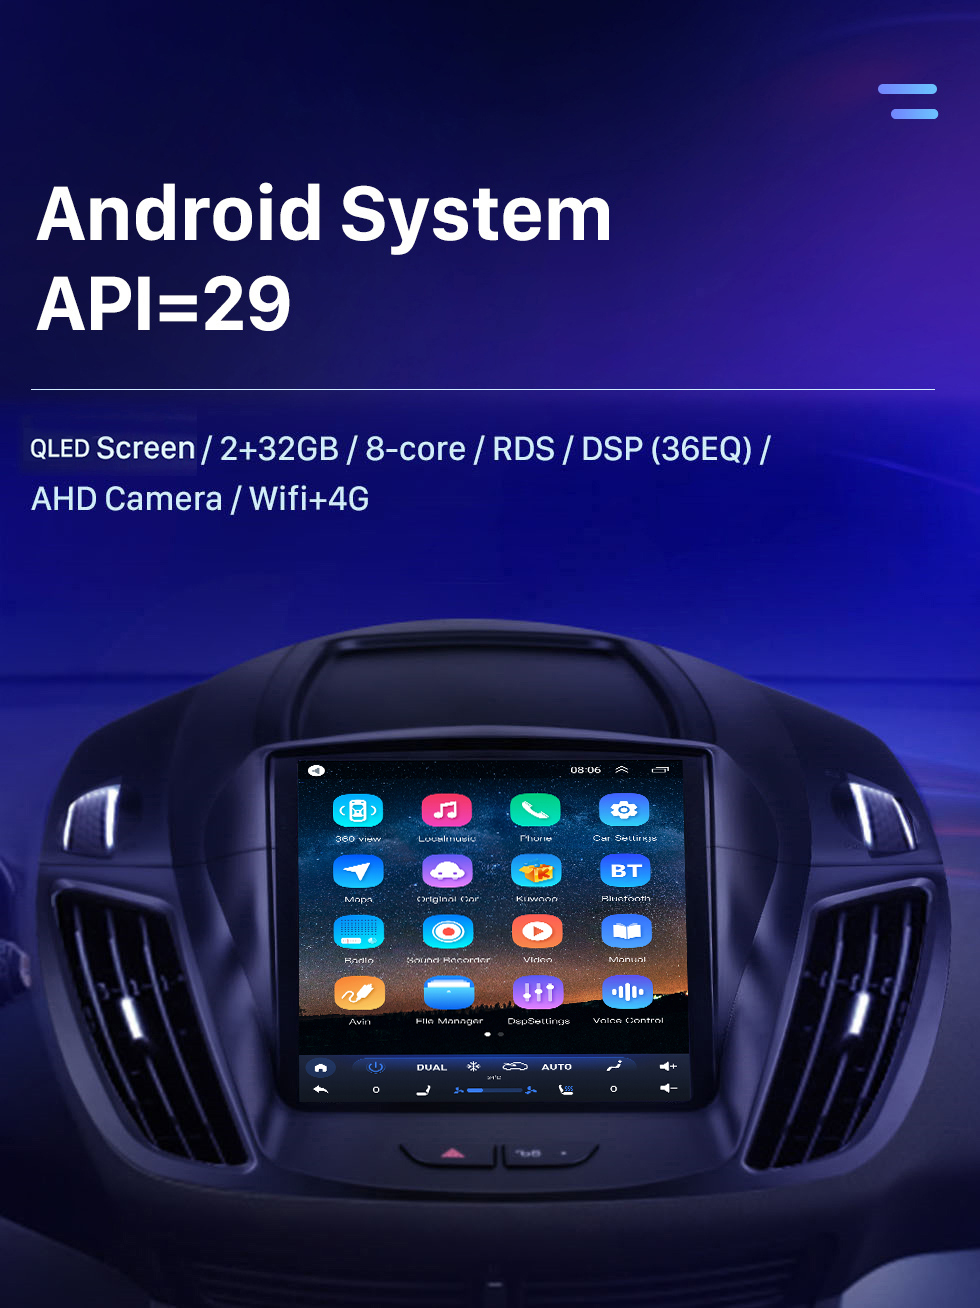 Android Auto Radio for Ford Kuga Escape 2013-2016 Multimedia GPS 2din  Autoradio